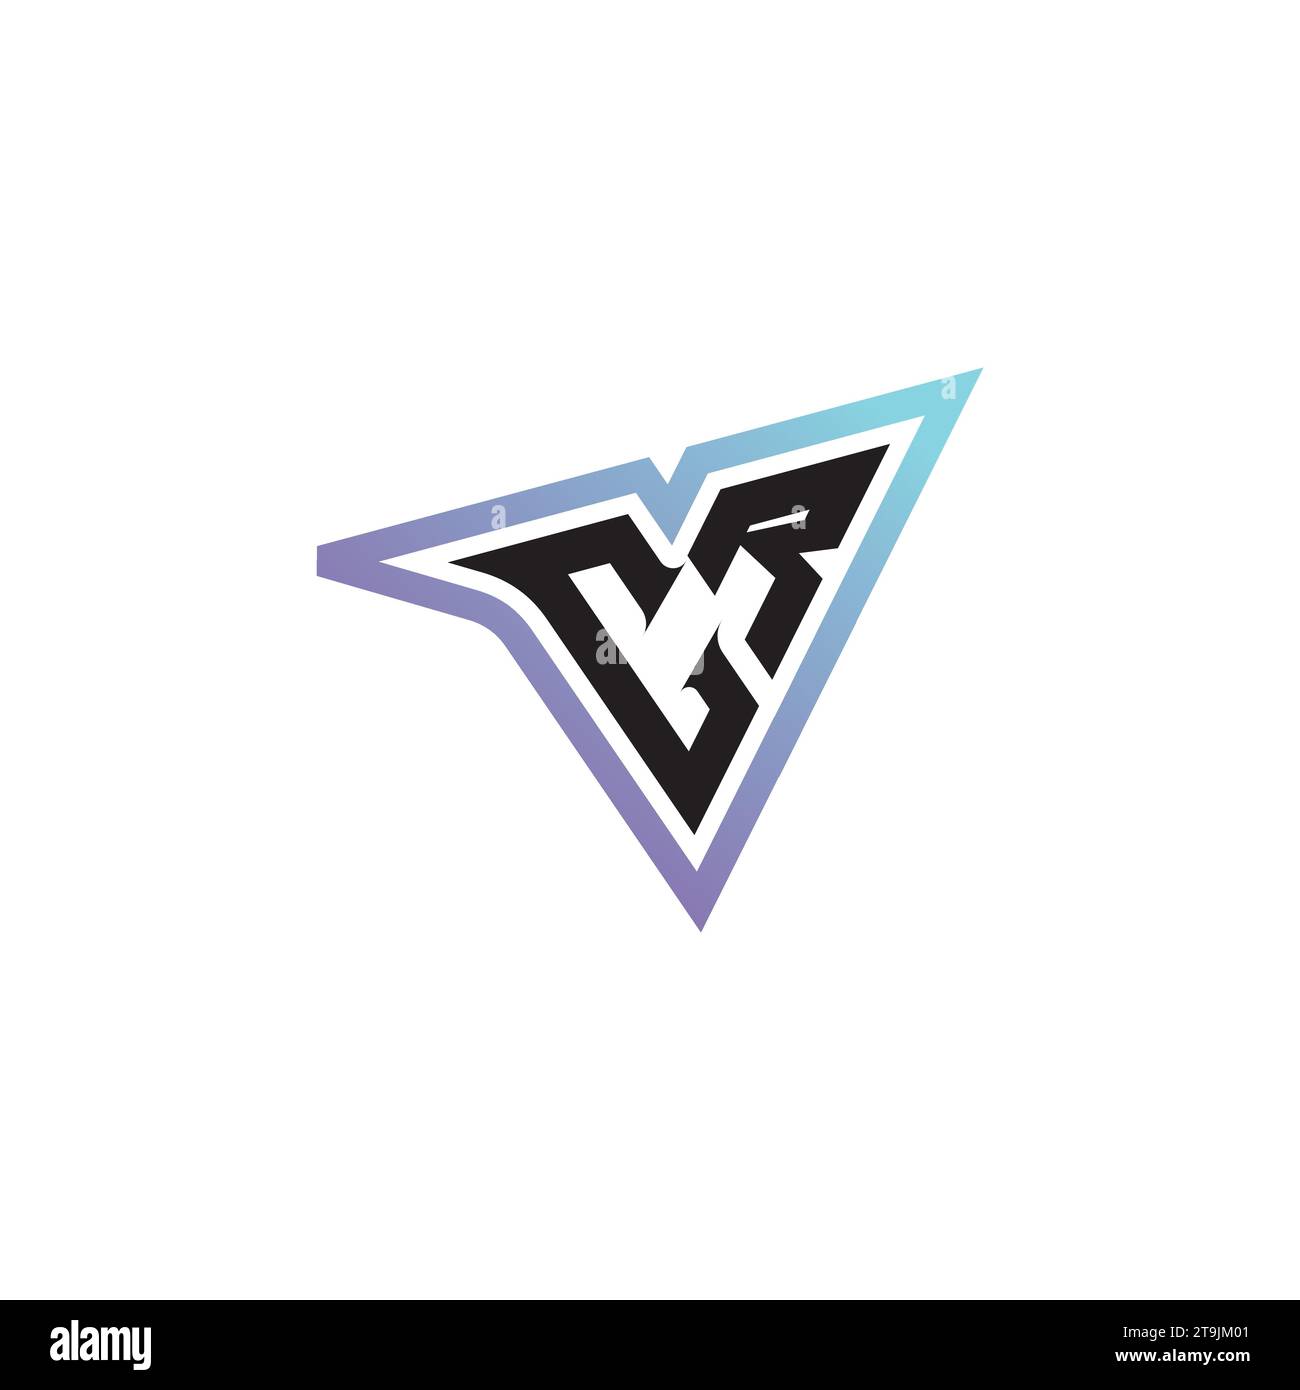 CR letter combination cool logo esport or gaming initial logo as a inspirational concept design Stock Vector